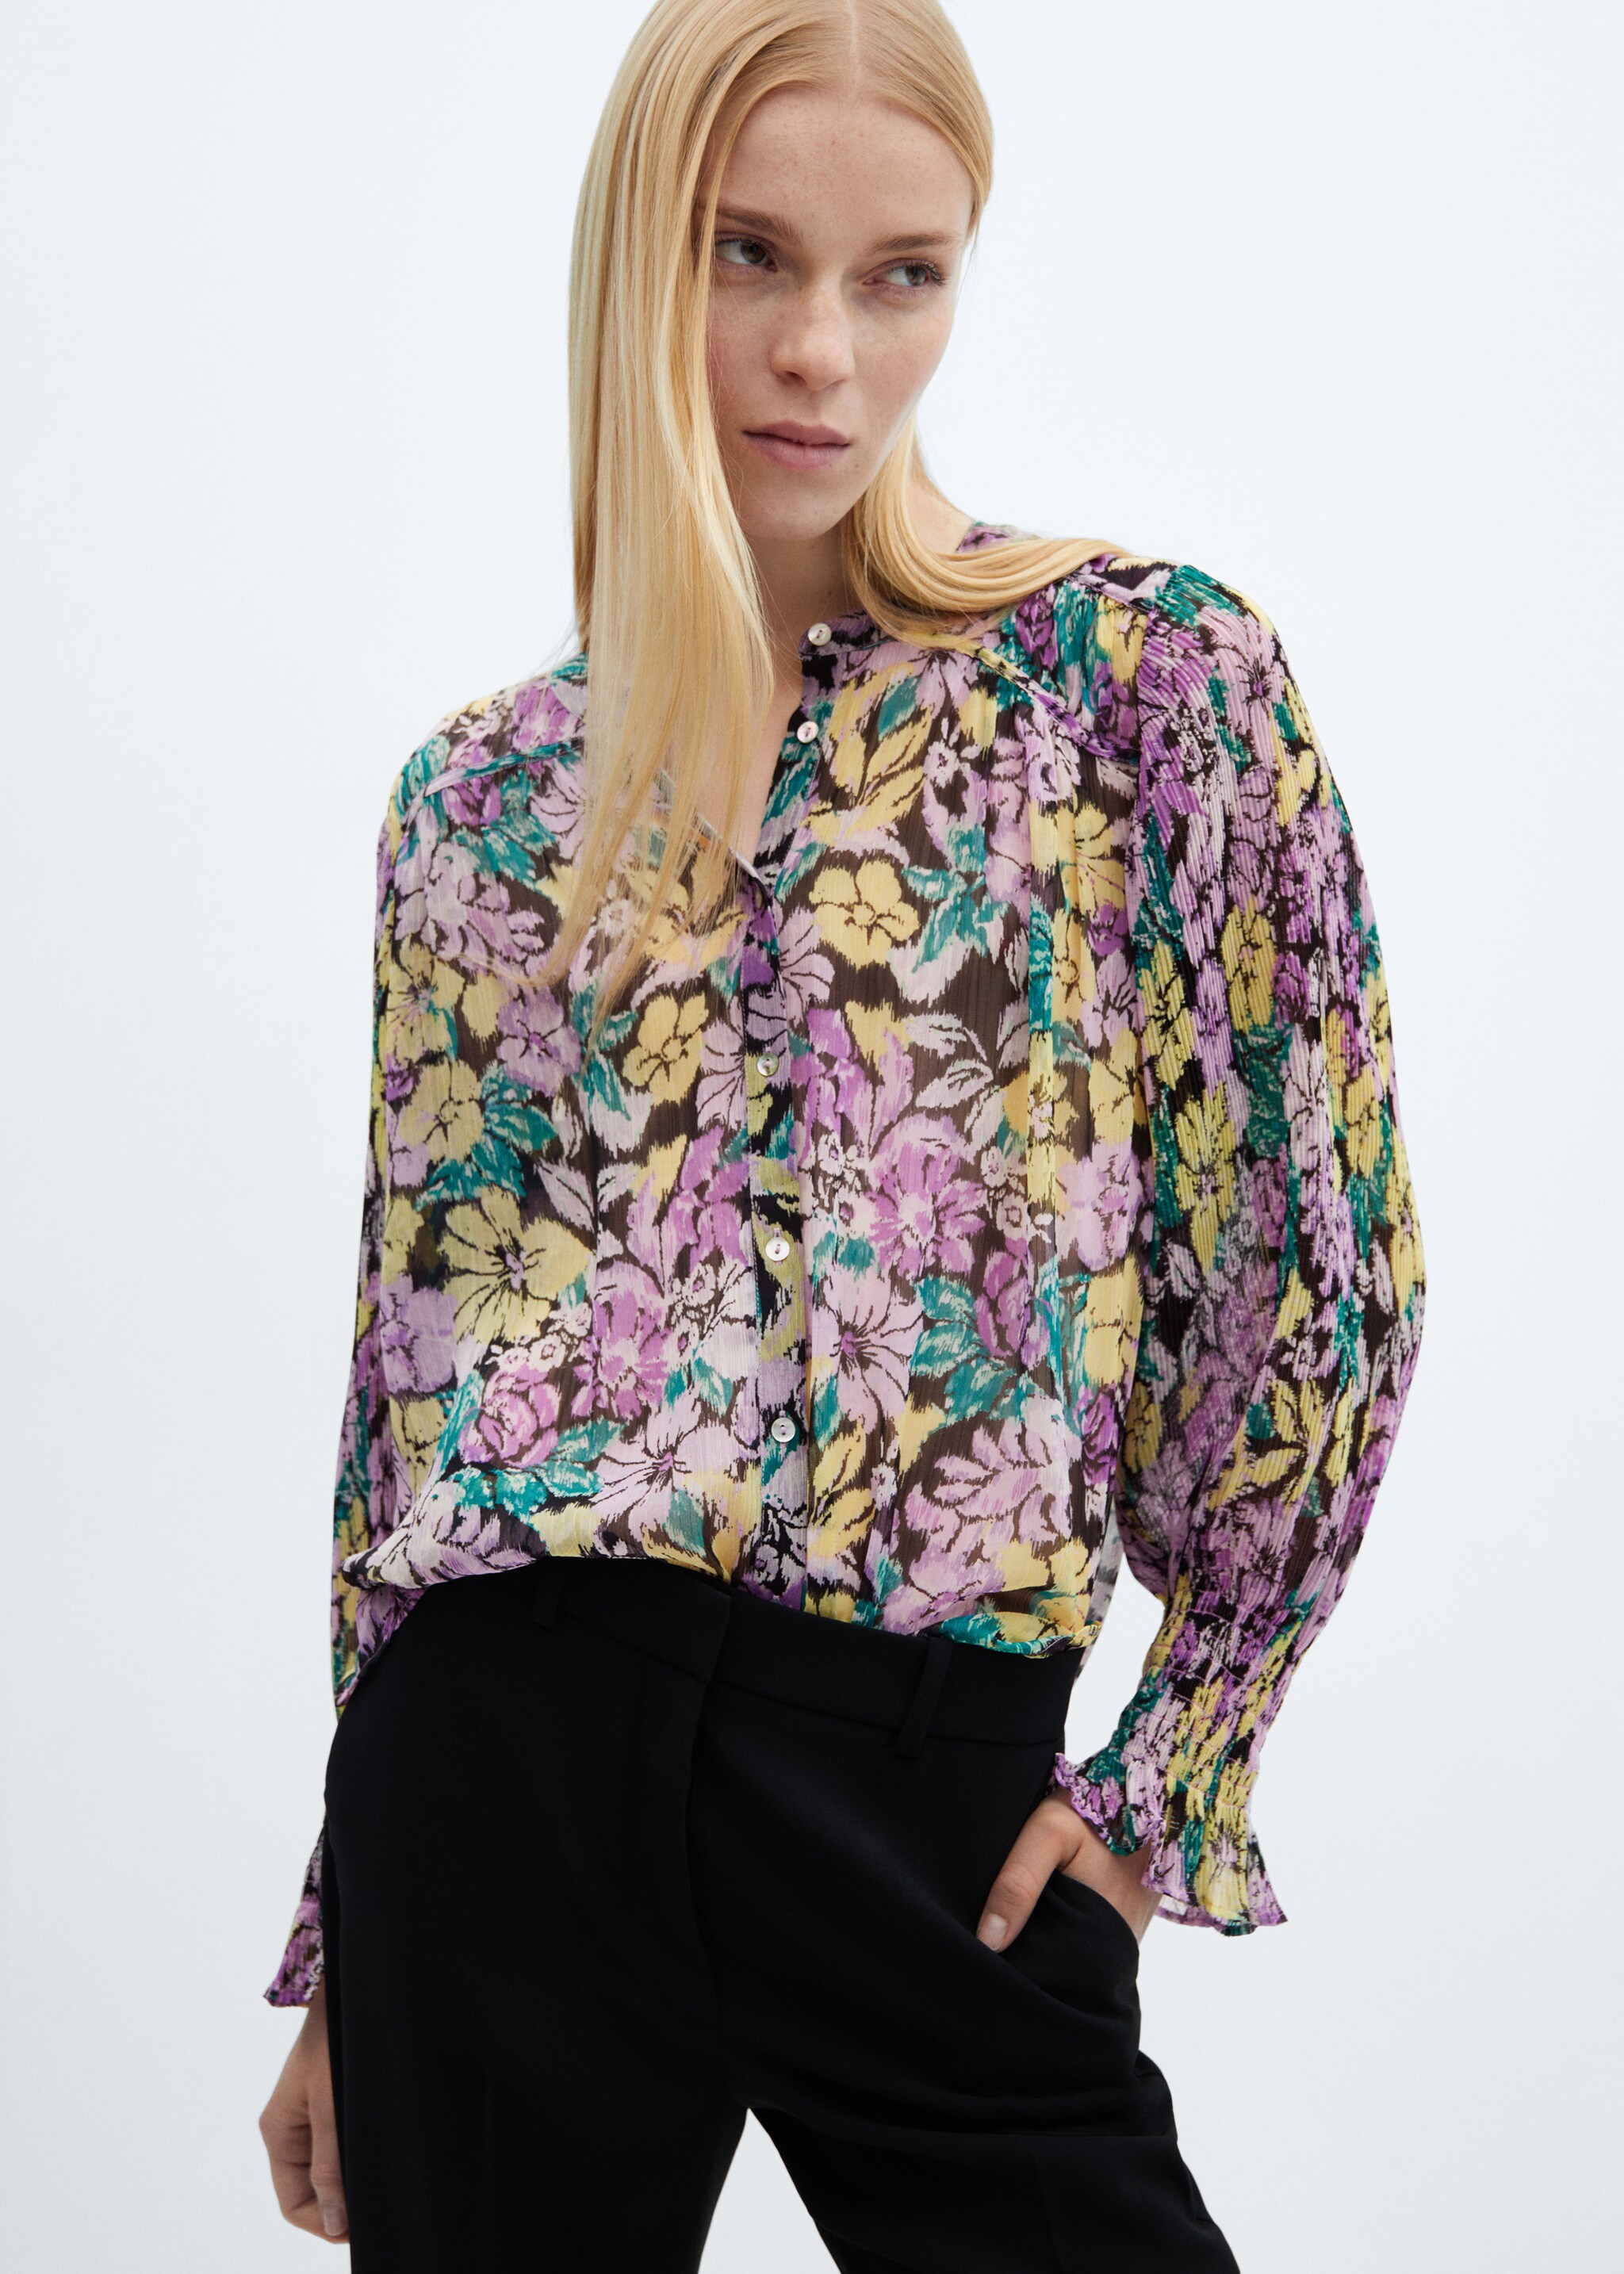 Floral textured blouse - Medium plane